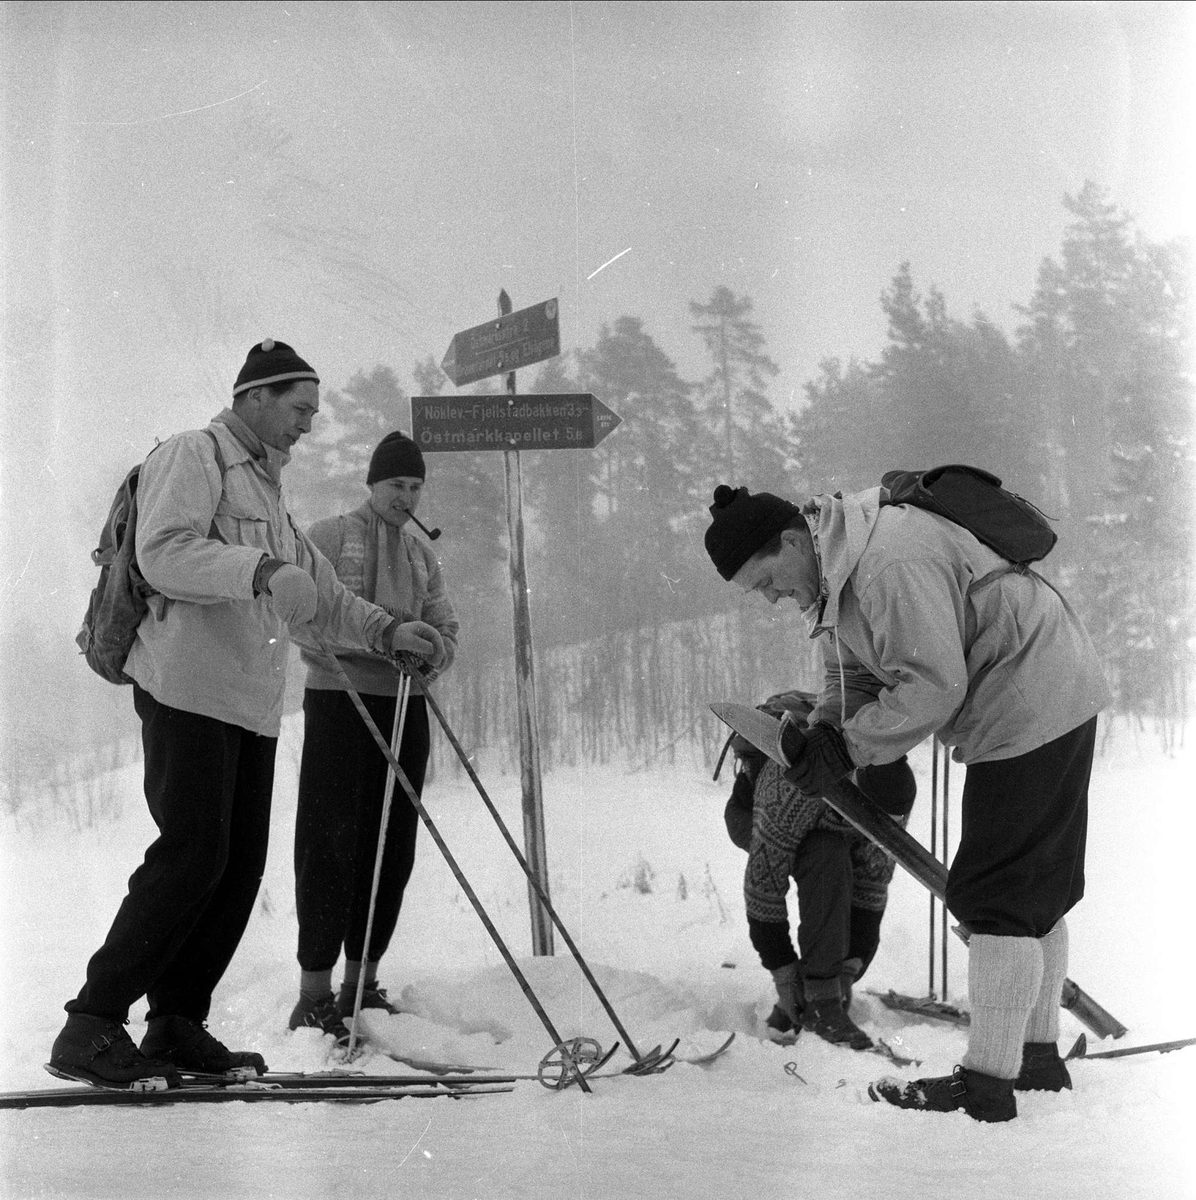 Skiløpere på tur i Østmarka fra Bøler til Ski, Oslo, 17.01.1959.